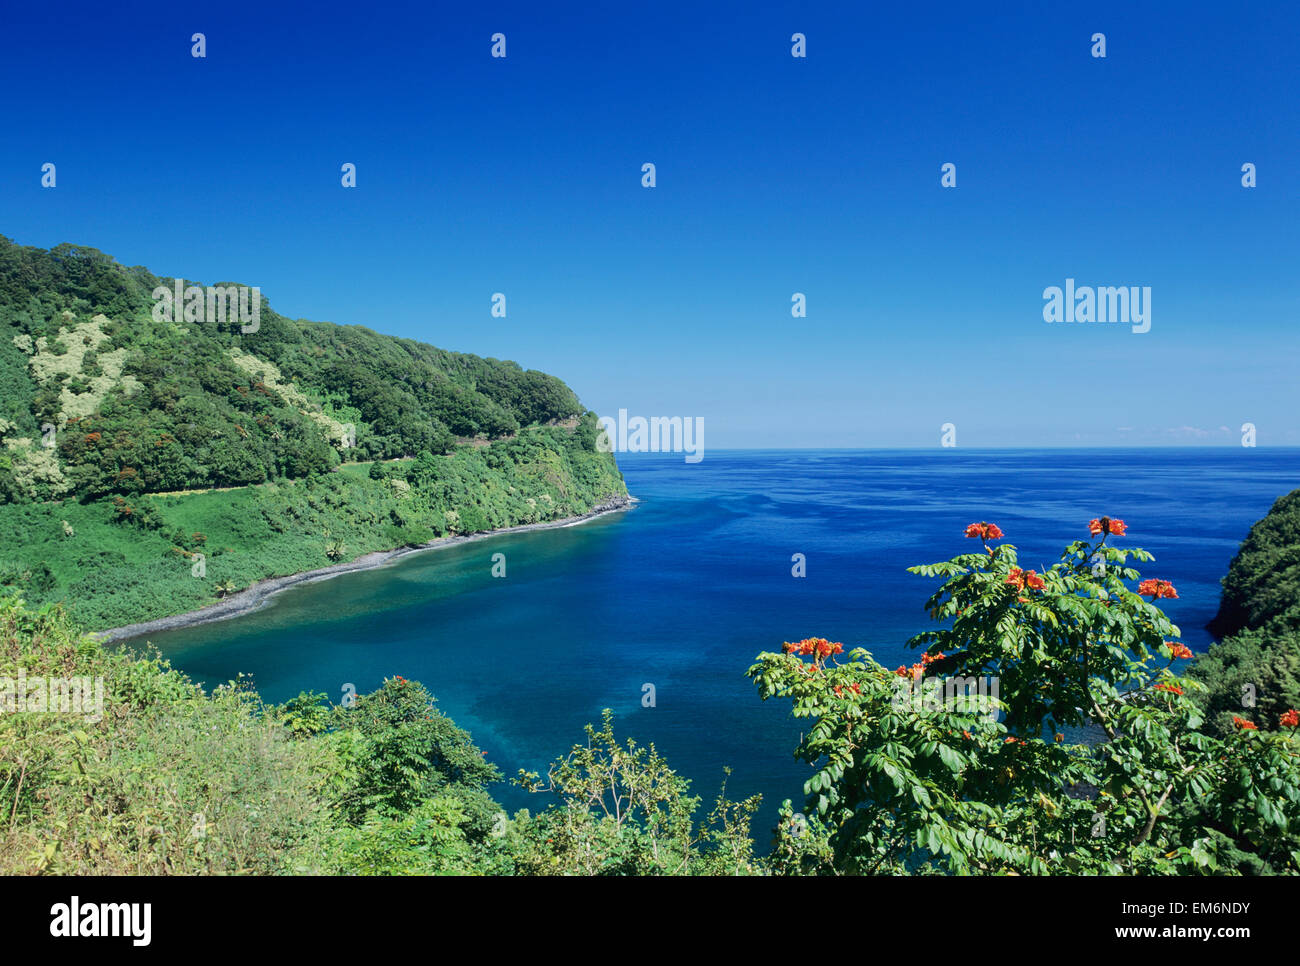 USA, Hawaii, Oahu, Kunia, View Of Honomanu Bay From Hana Highway; Hana Coast Stock Photo